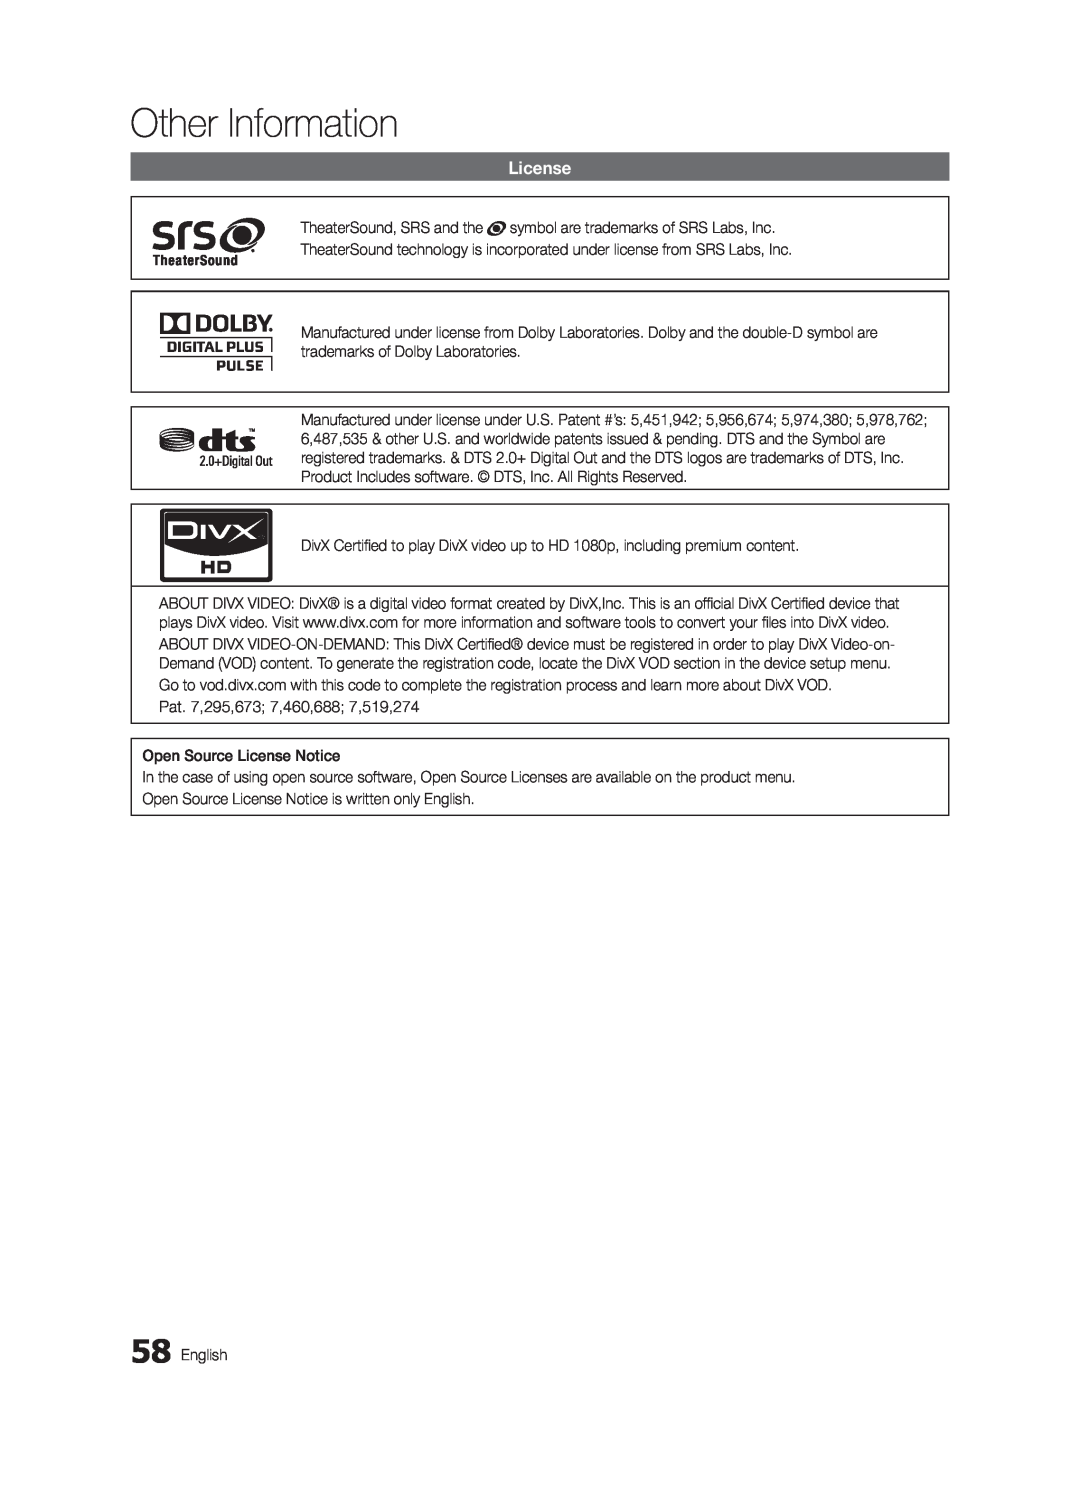 Samsung 6800 user manual License, Other Information 